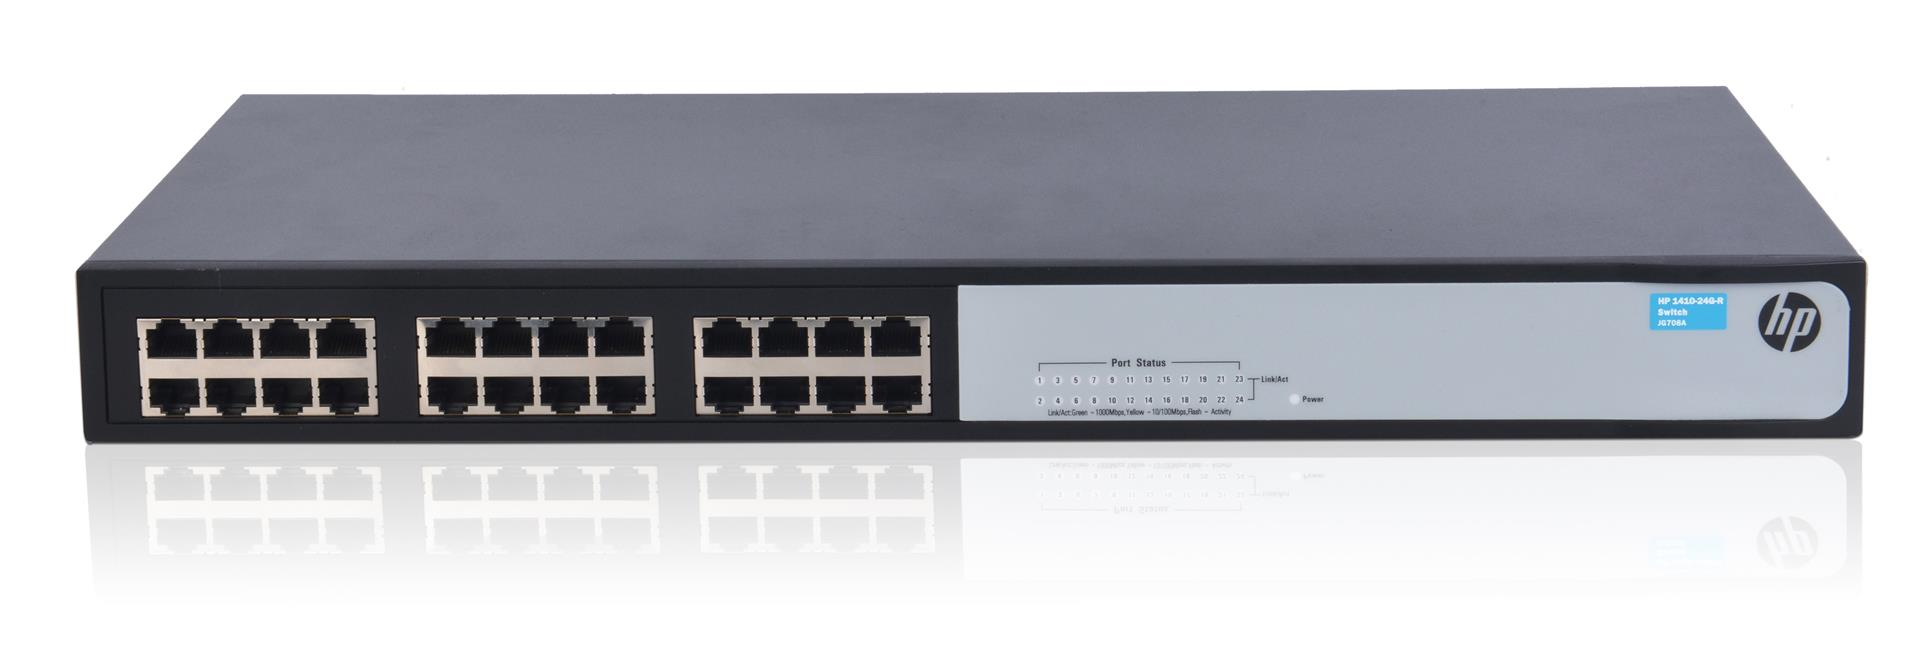 HP 1410-24G-R Switch (JG708A)